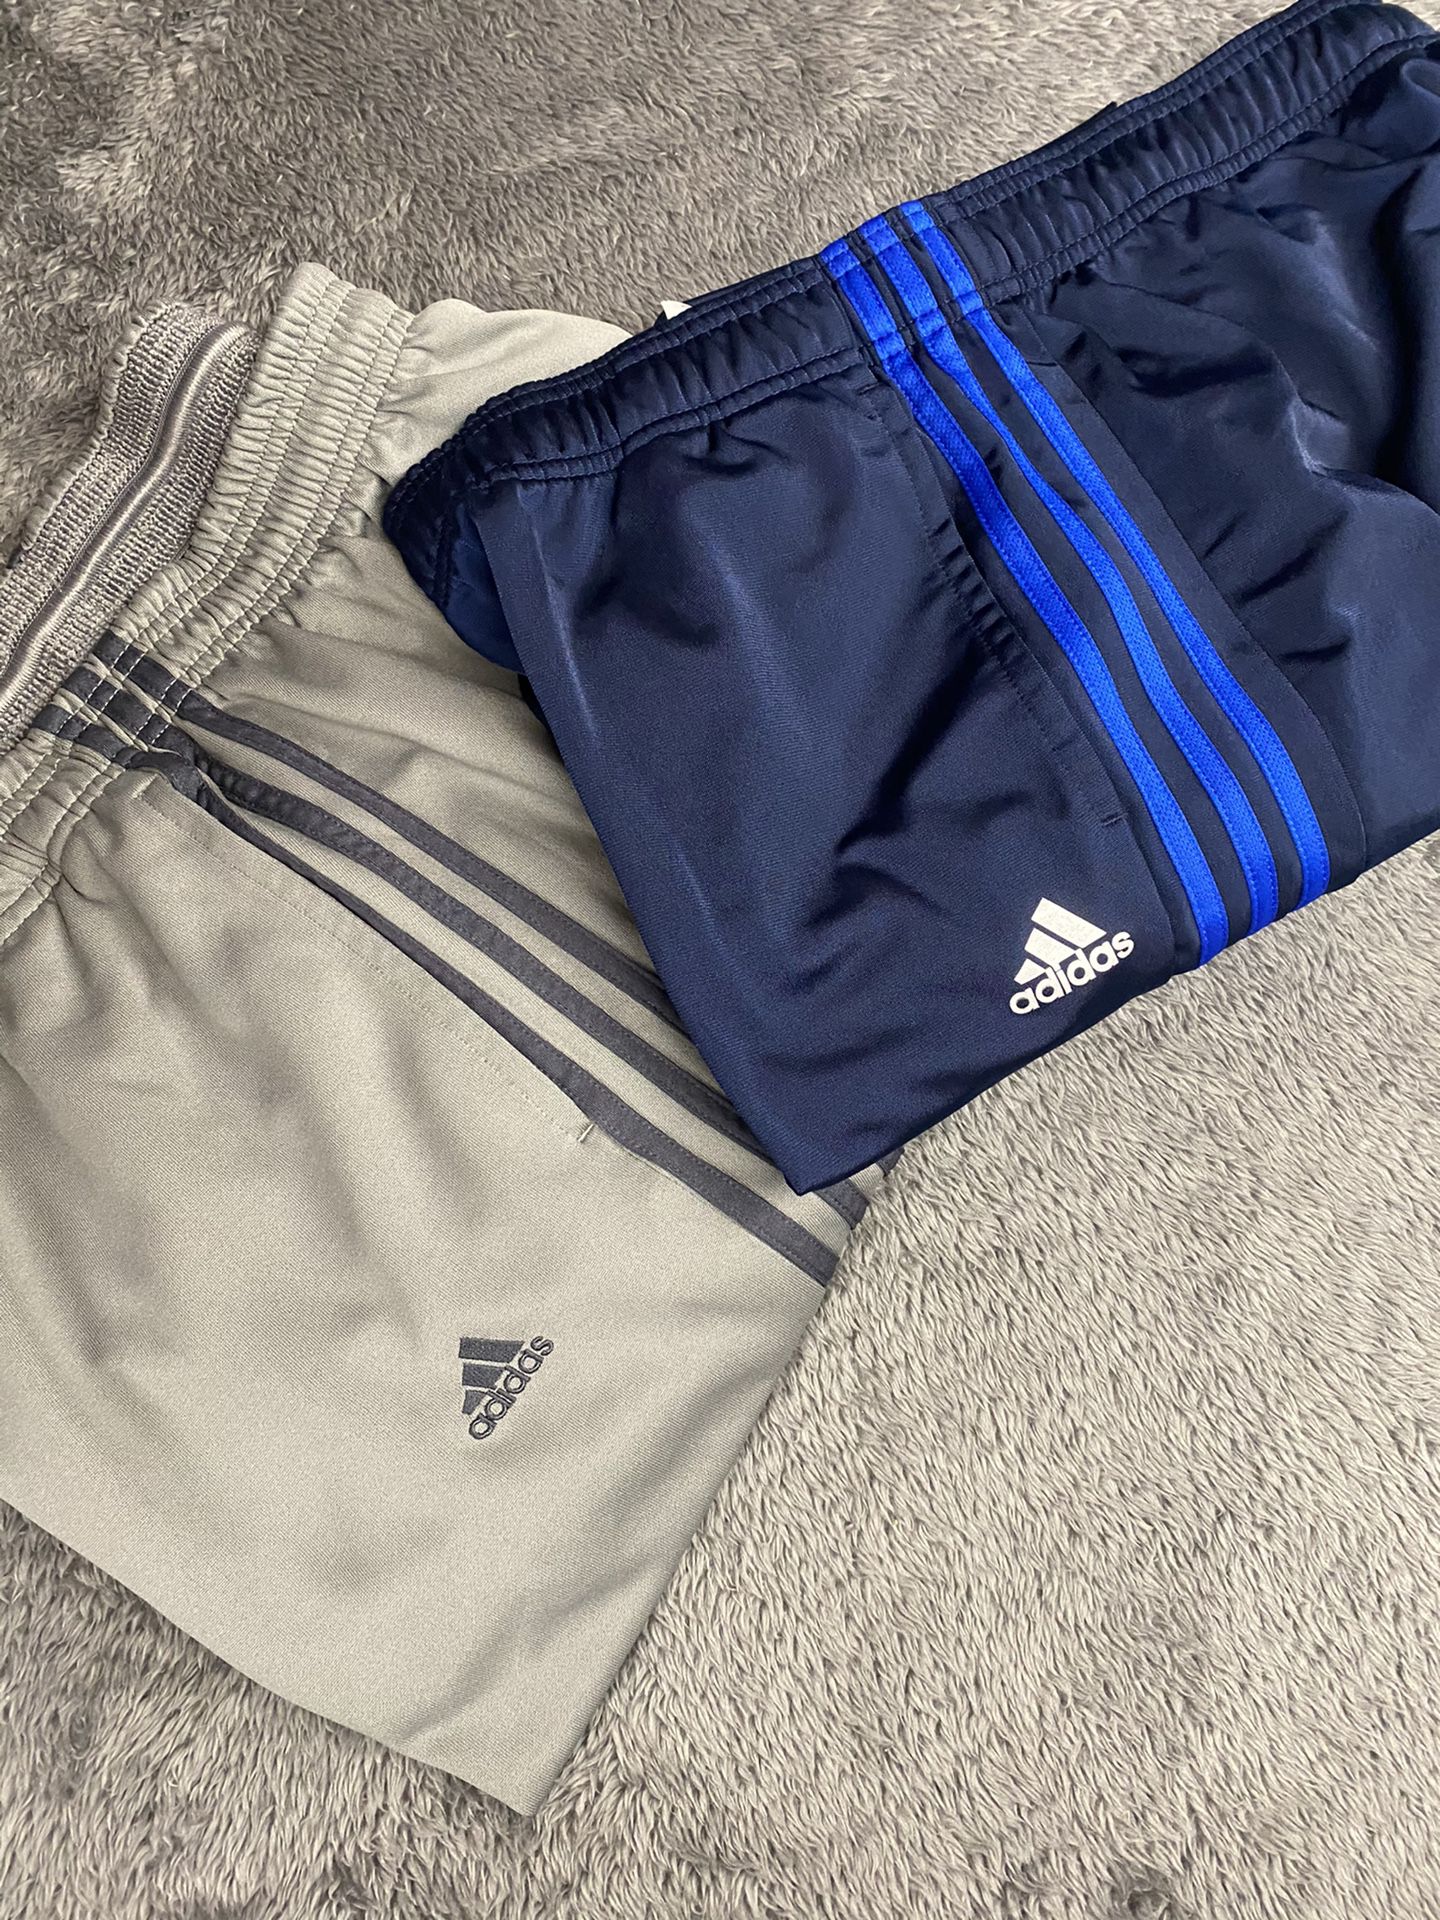 Adidas Men’s XL Cool365 Athletic Pants!